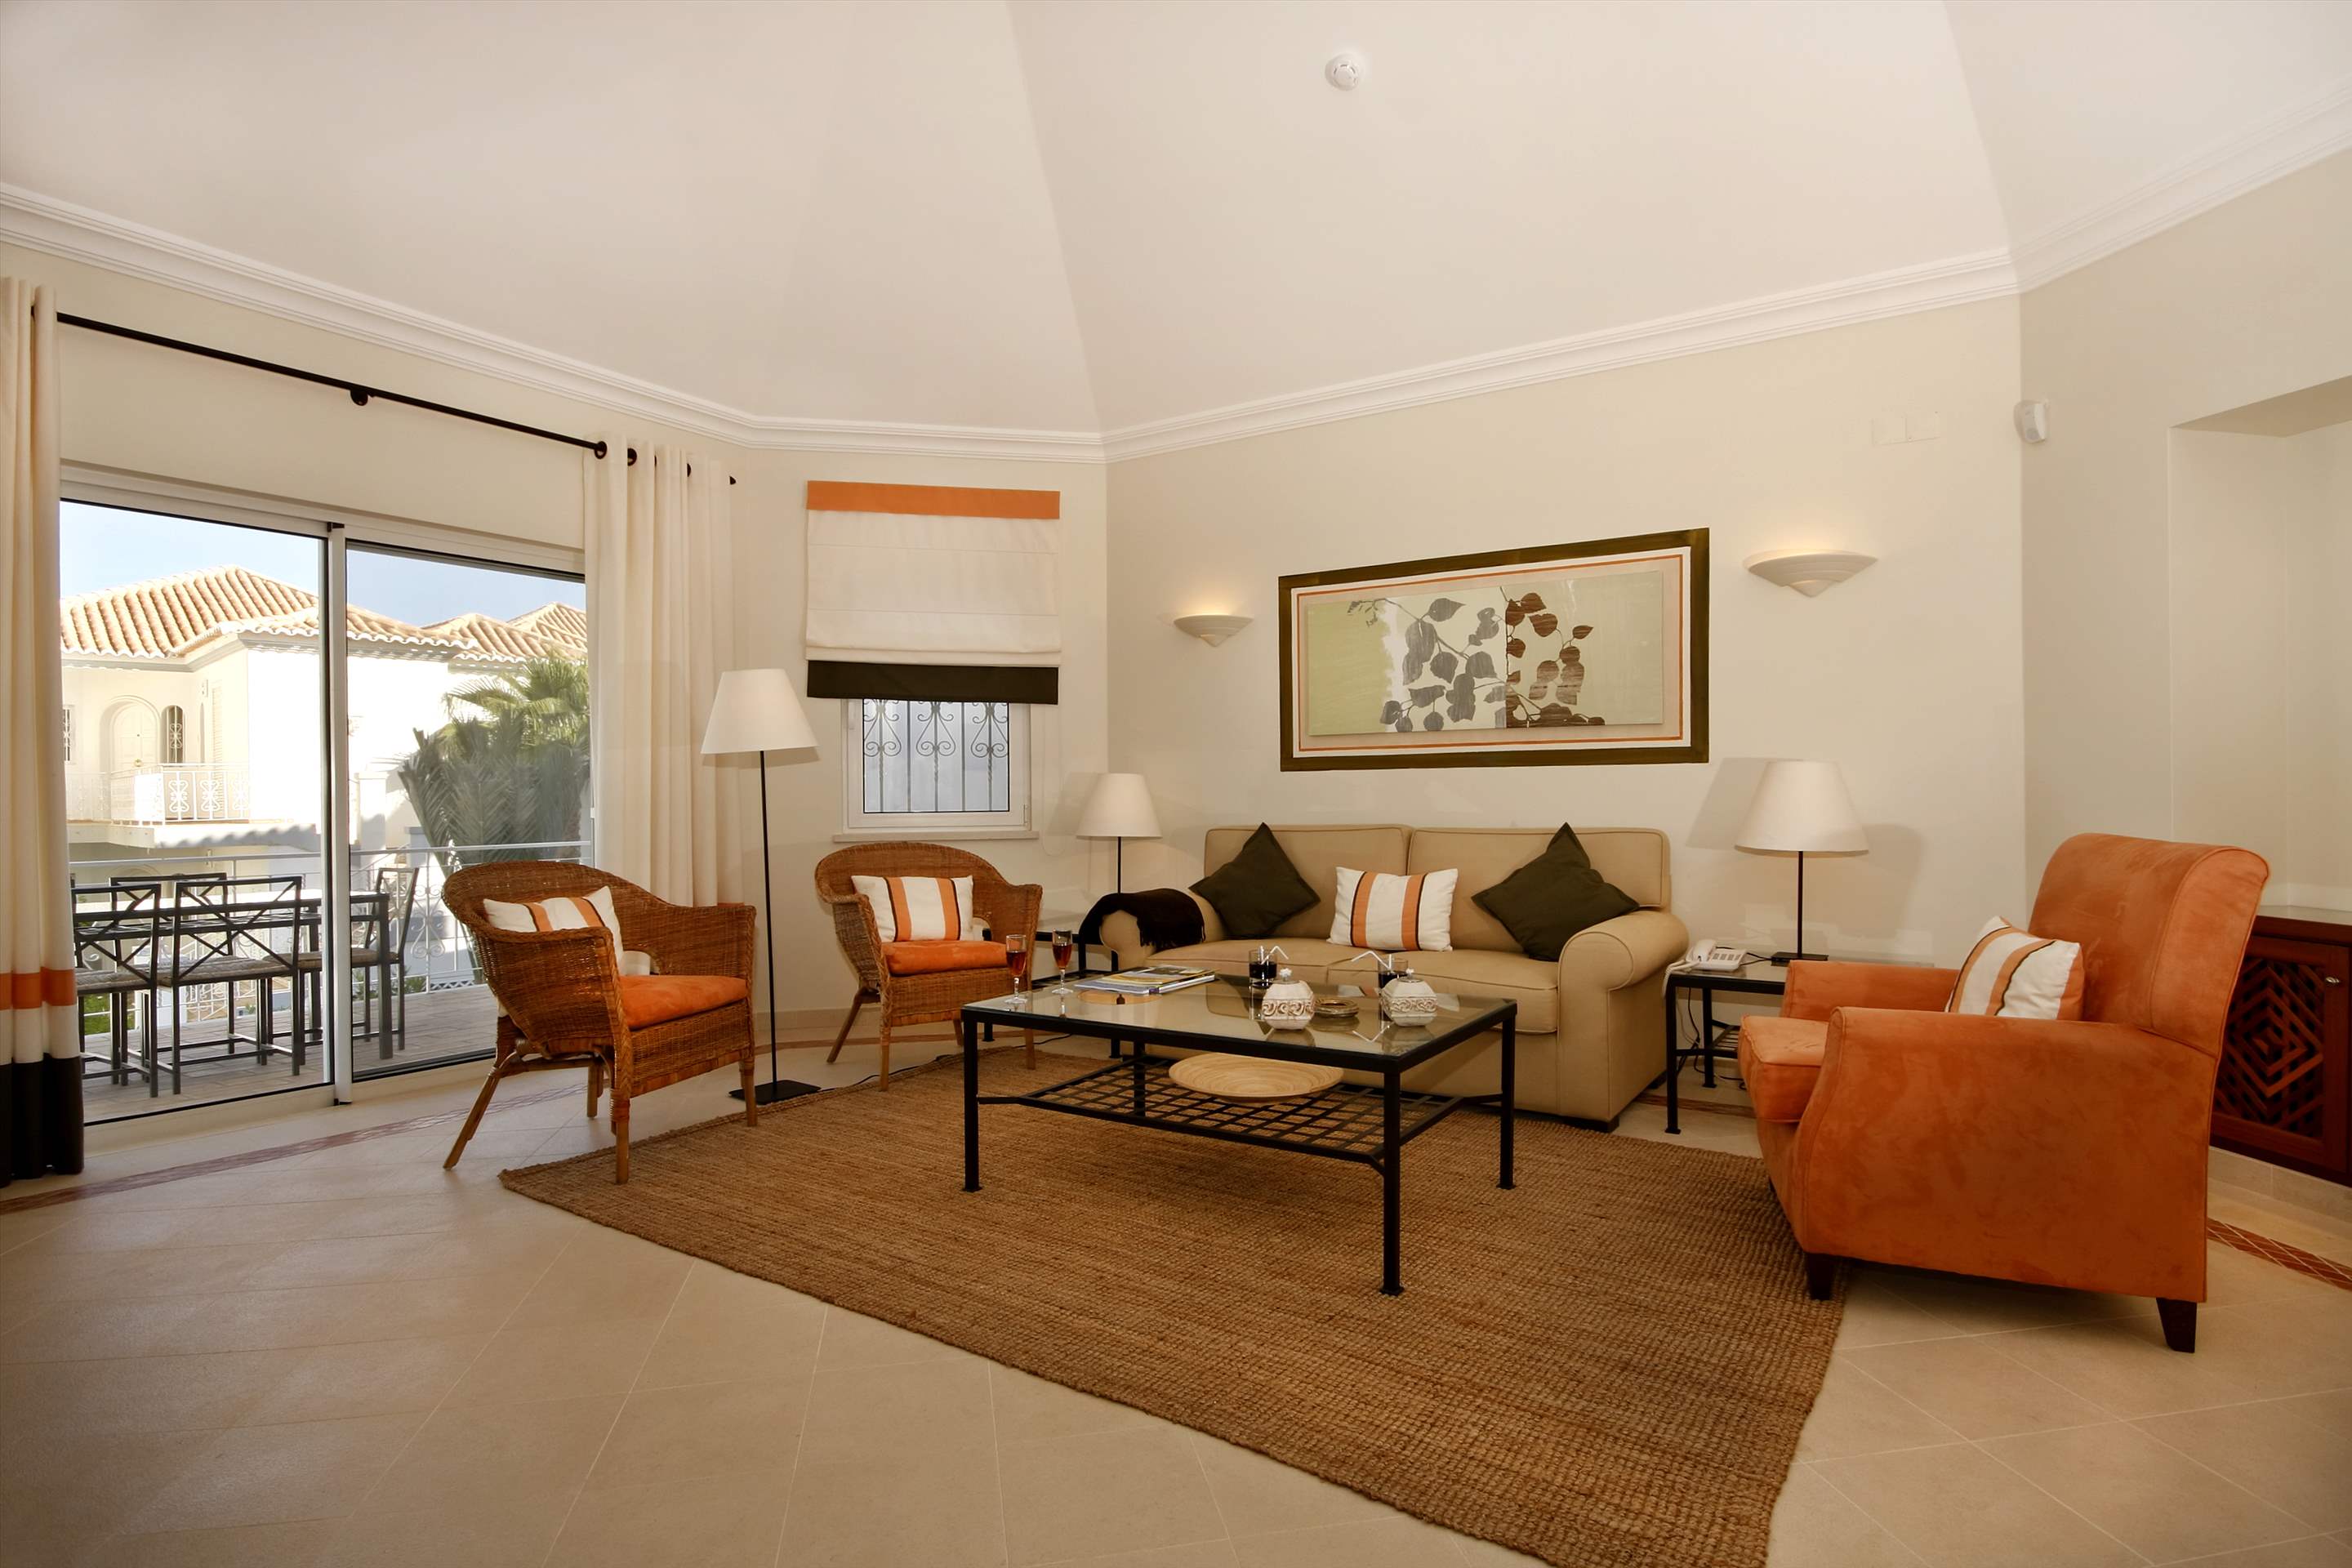 Encosta do Lago 1 Bedroom Apt, Top Floor, 1 bedroom apartment in Encosta do Lago Resort, Algarve Photo #3